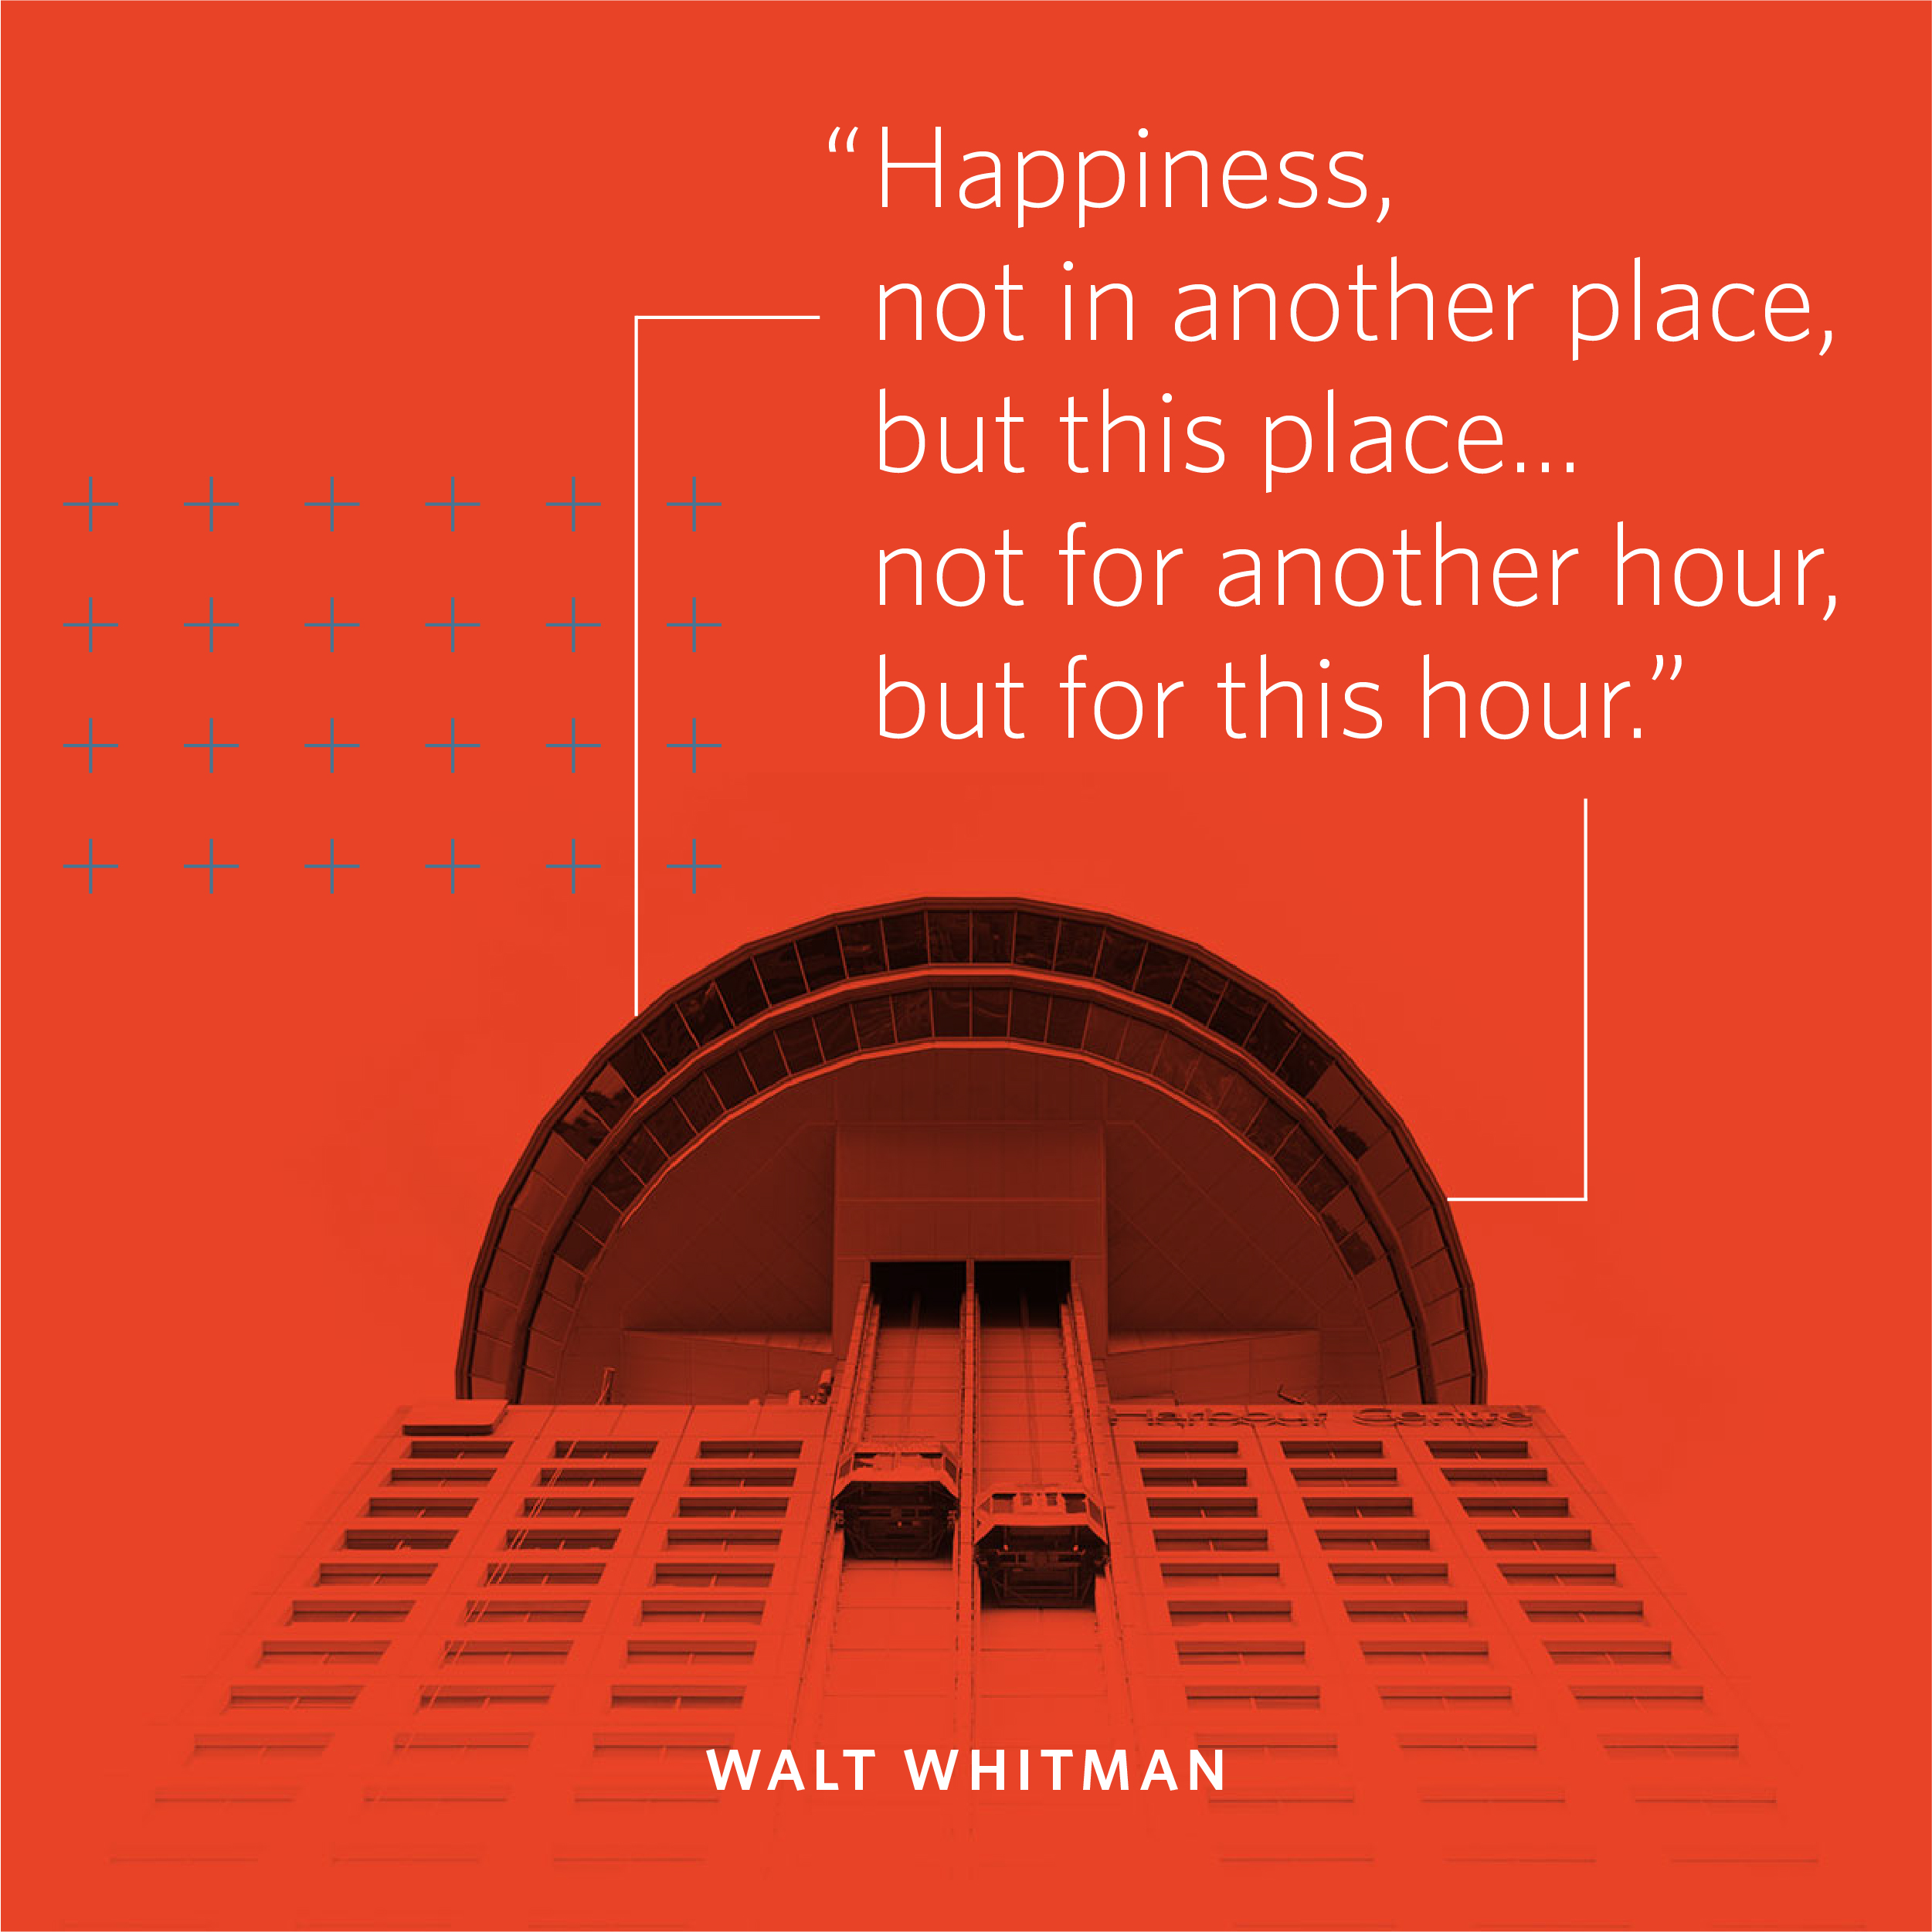 Walt Whitman quote